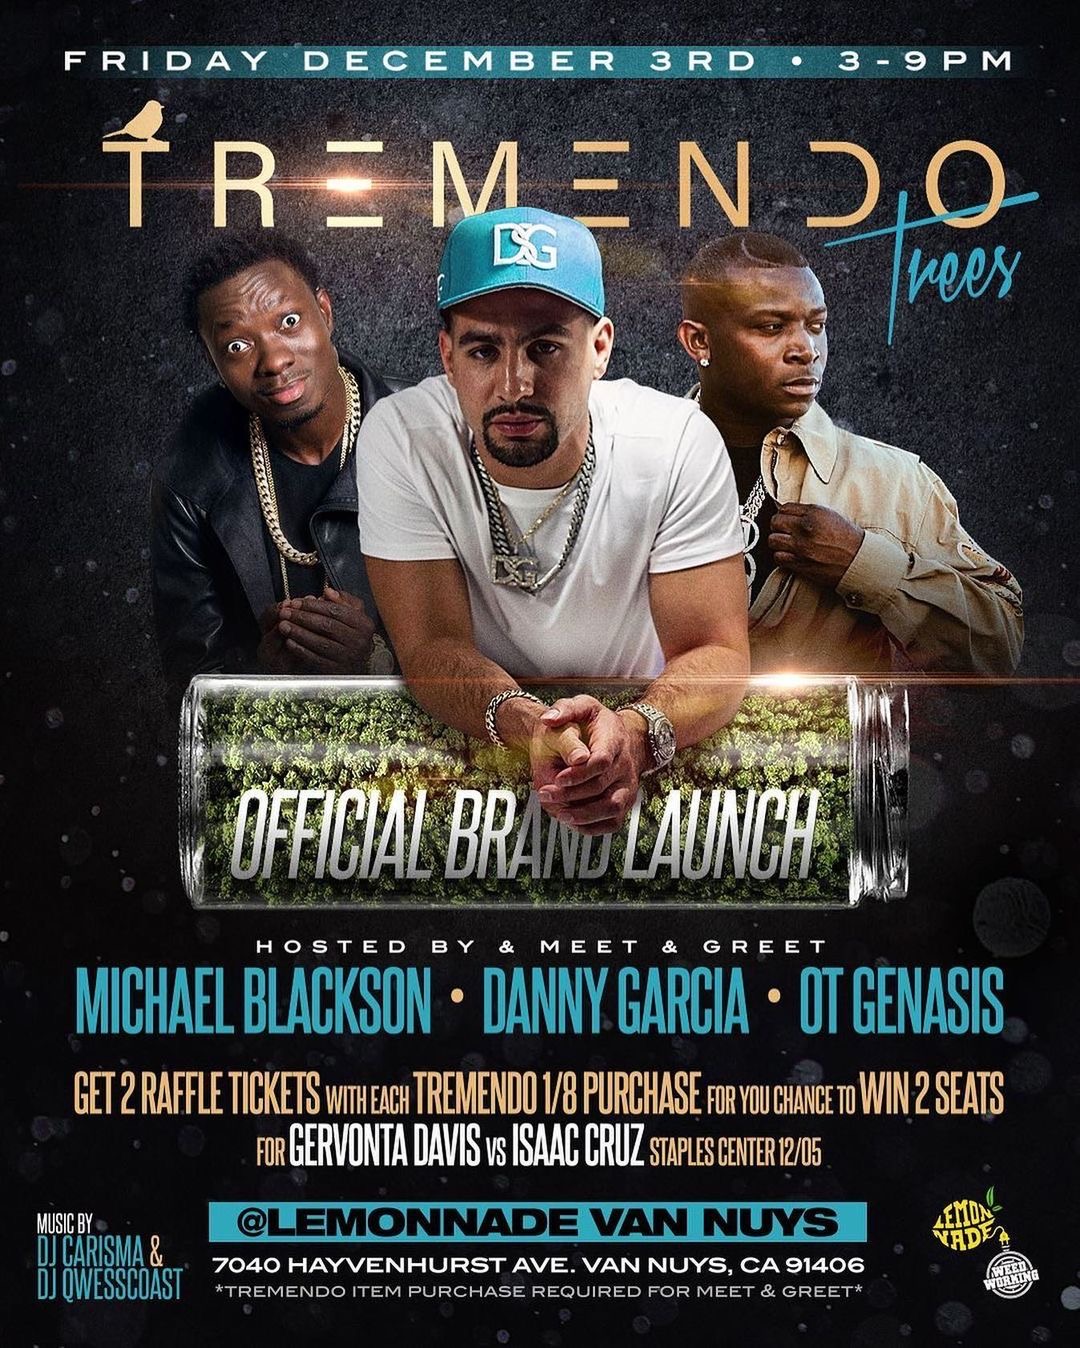 Danny Garcia, Michael Blackson and OT Genasis to Host TREMENDO TREES Brand Launch Event